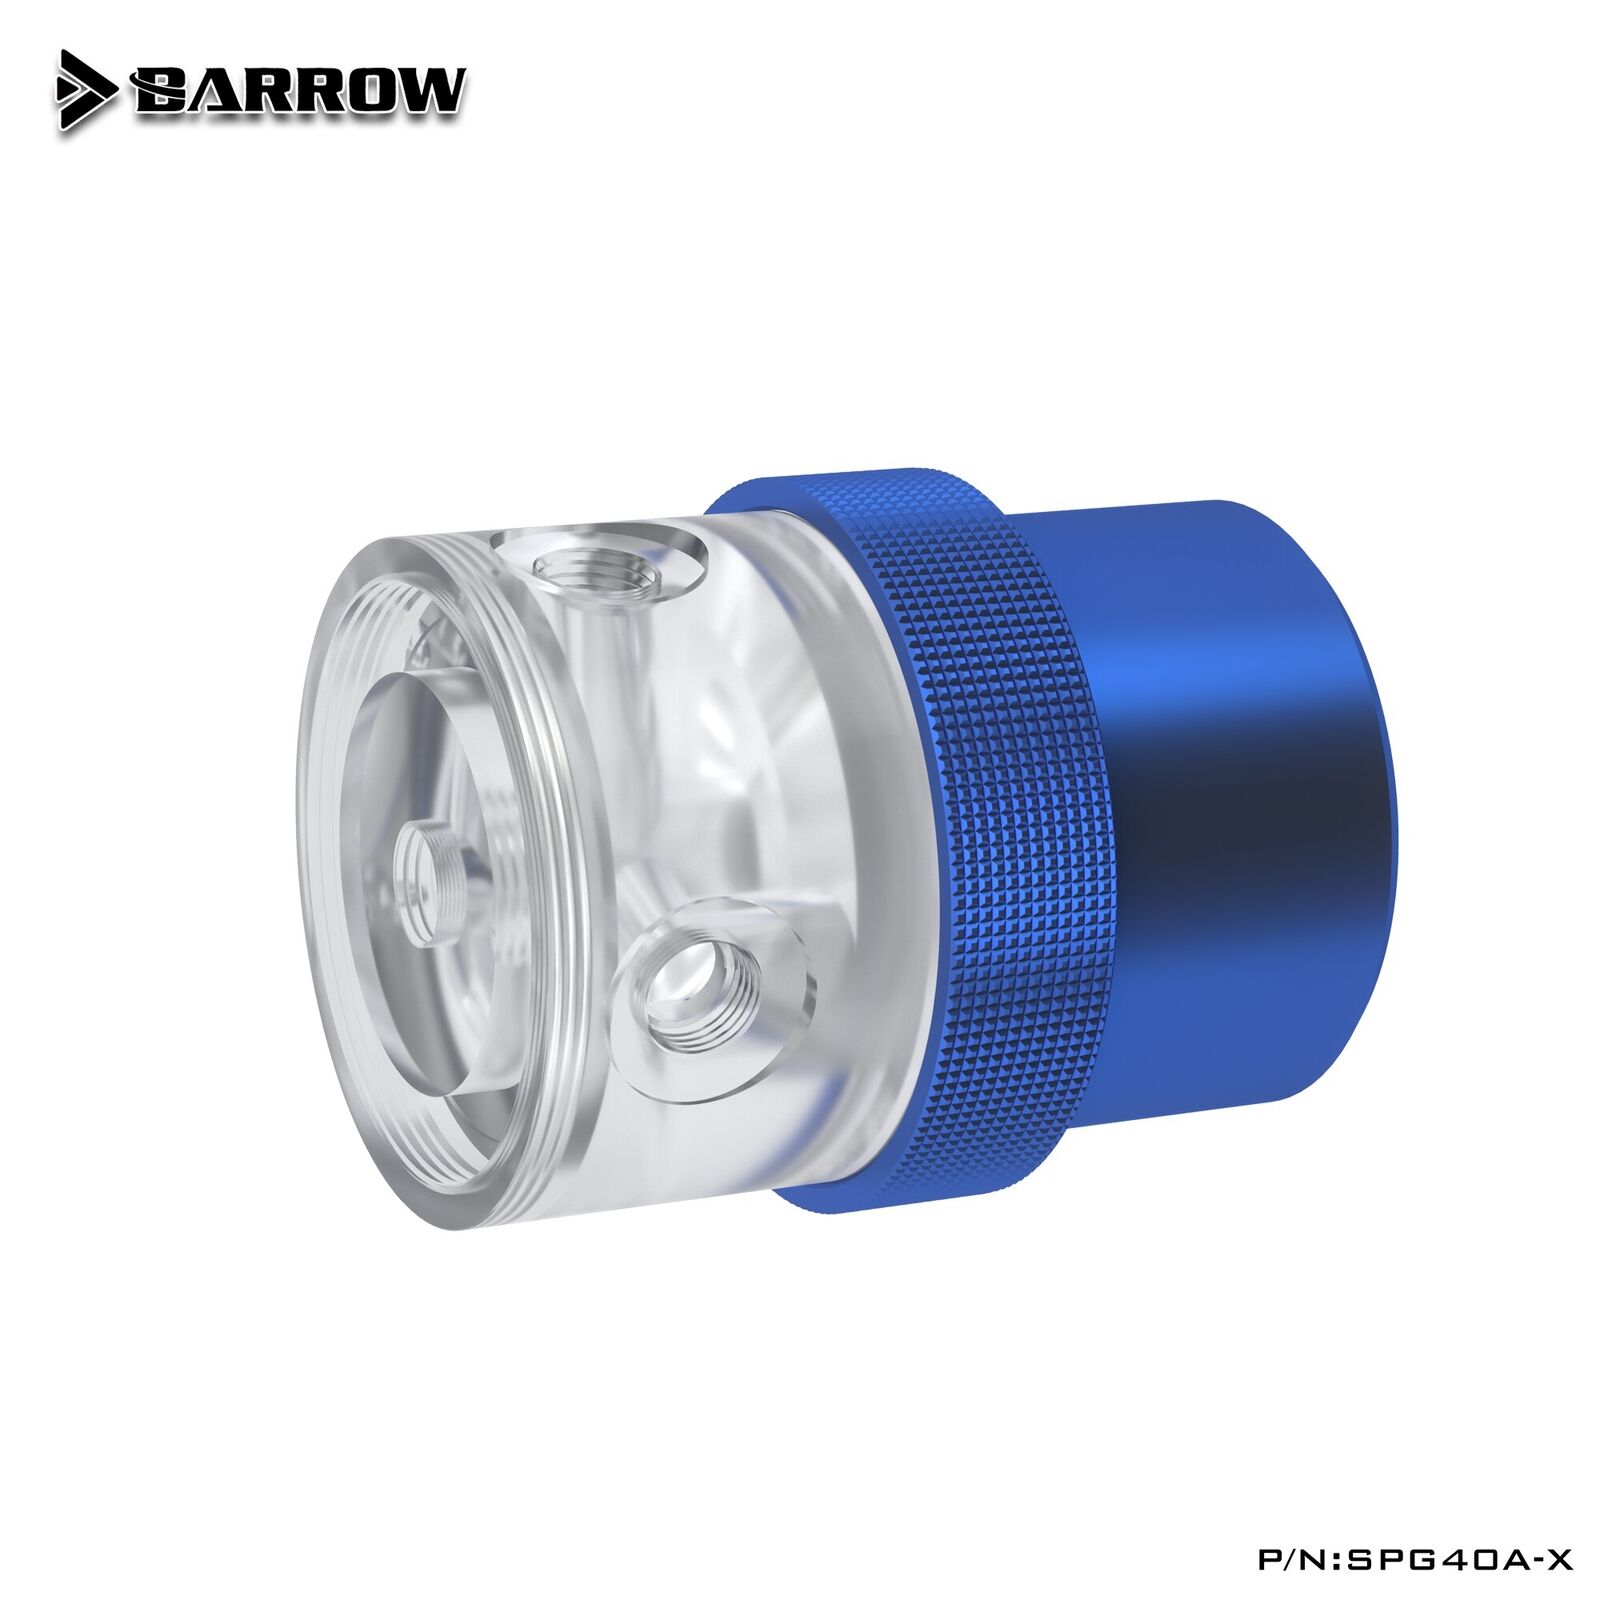 Barrow SPG40A-X 18W PWM D5 Water Pump Maximum Flow 1260L/H For PC Case Cooling